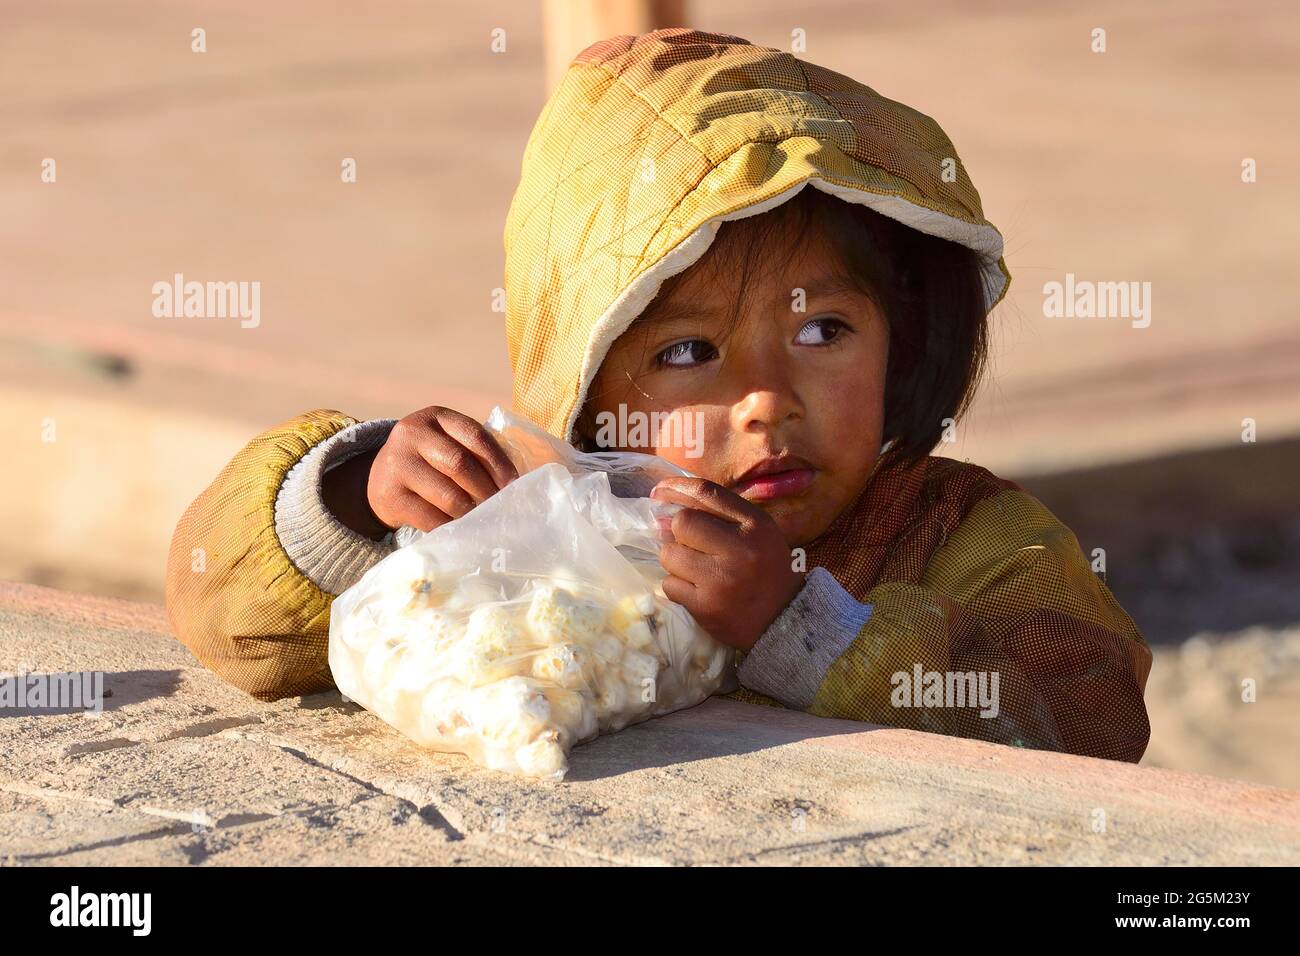 Child nibbling a snack of corn, Chinchero, Cusco region, Urubamba province, Peru, South America Stock Photo